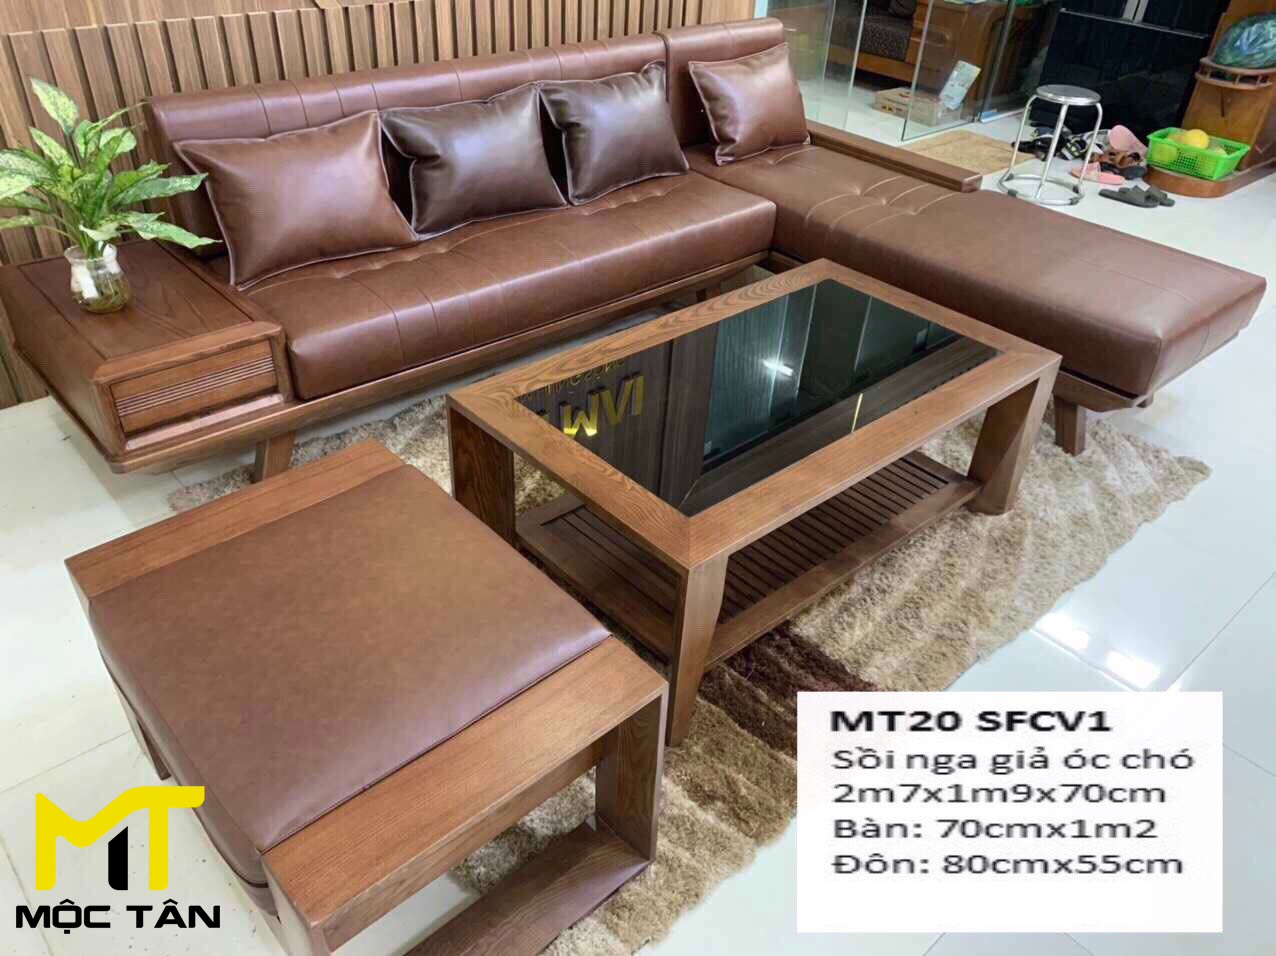 Sofa gỗ Sồi MT20 SFCV1